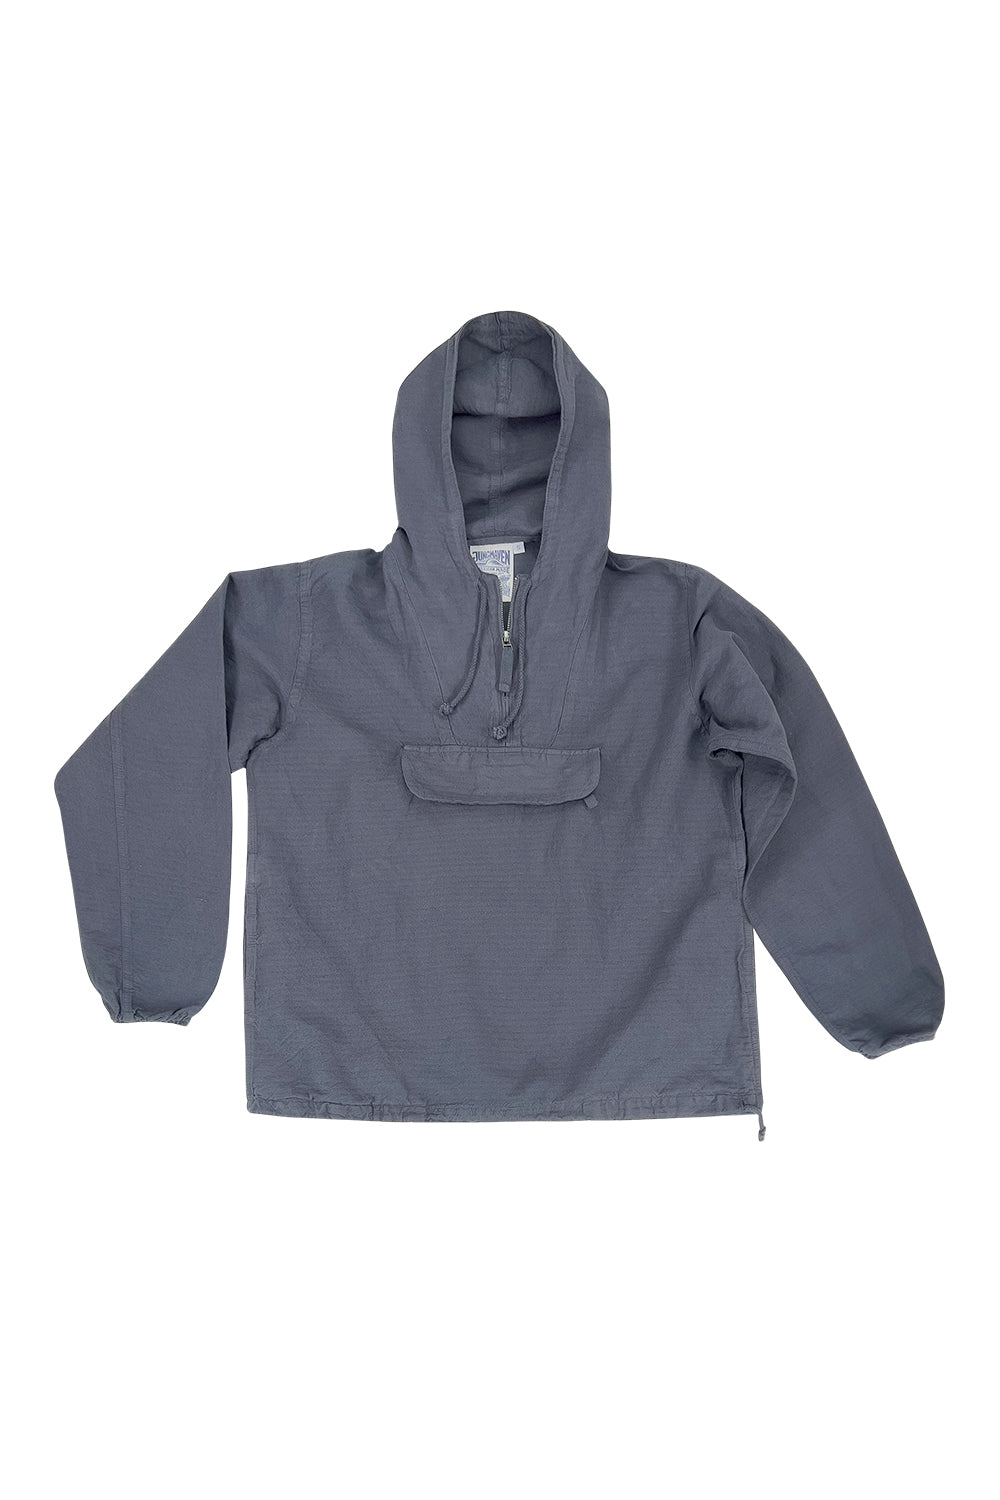 Shoreline Anorak Jacket | Jungmaven Hemp Clothing & Accessories / Color: Diesel Gray